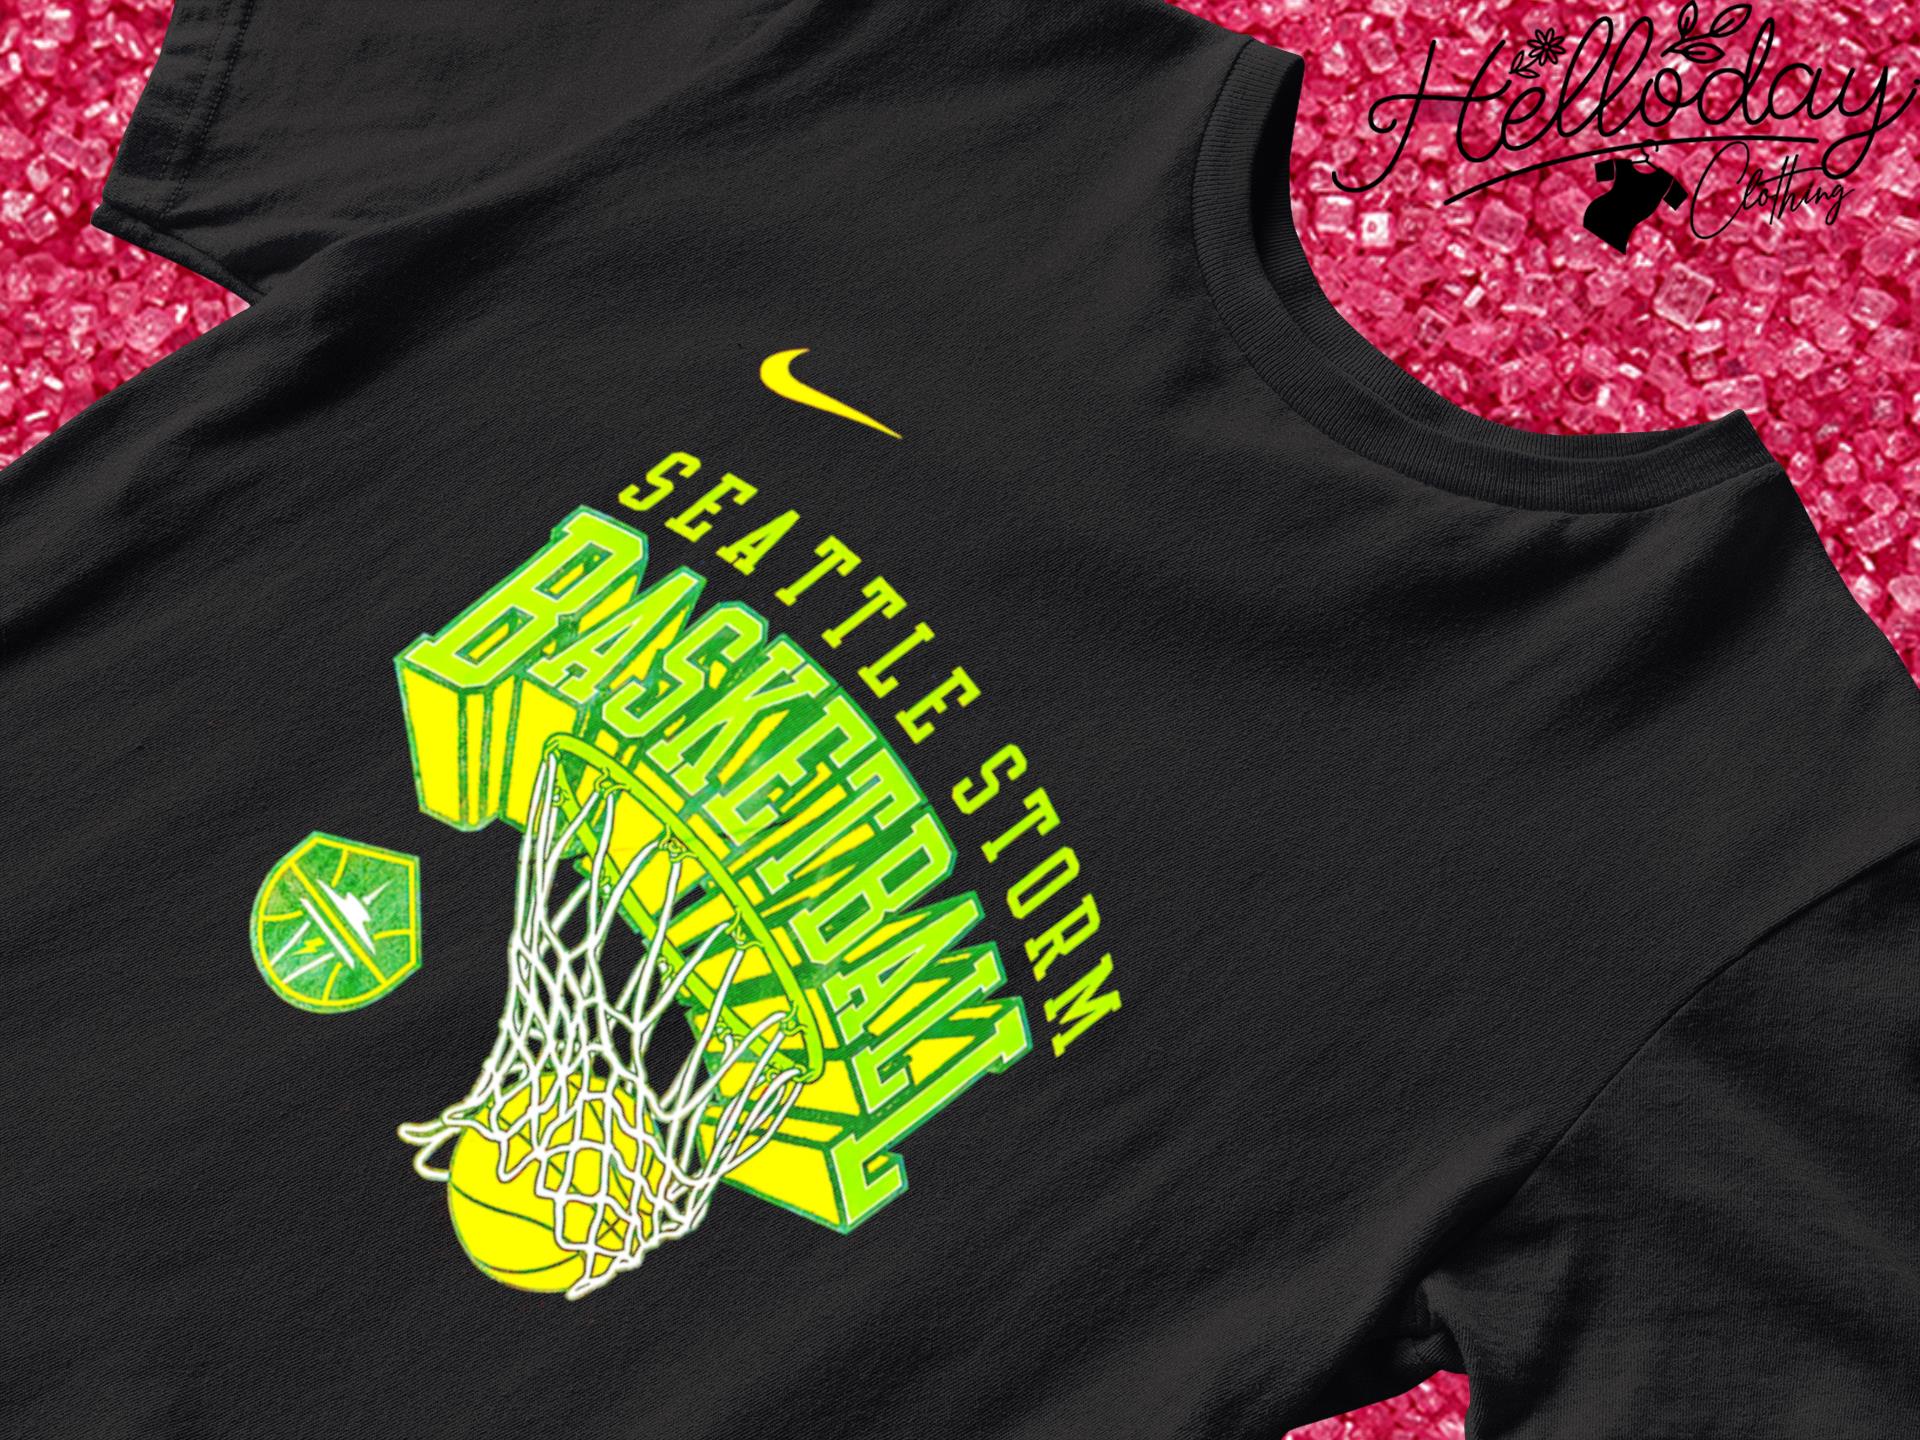 Seattle Storm Basketball logo shirt